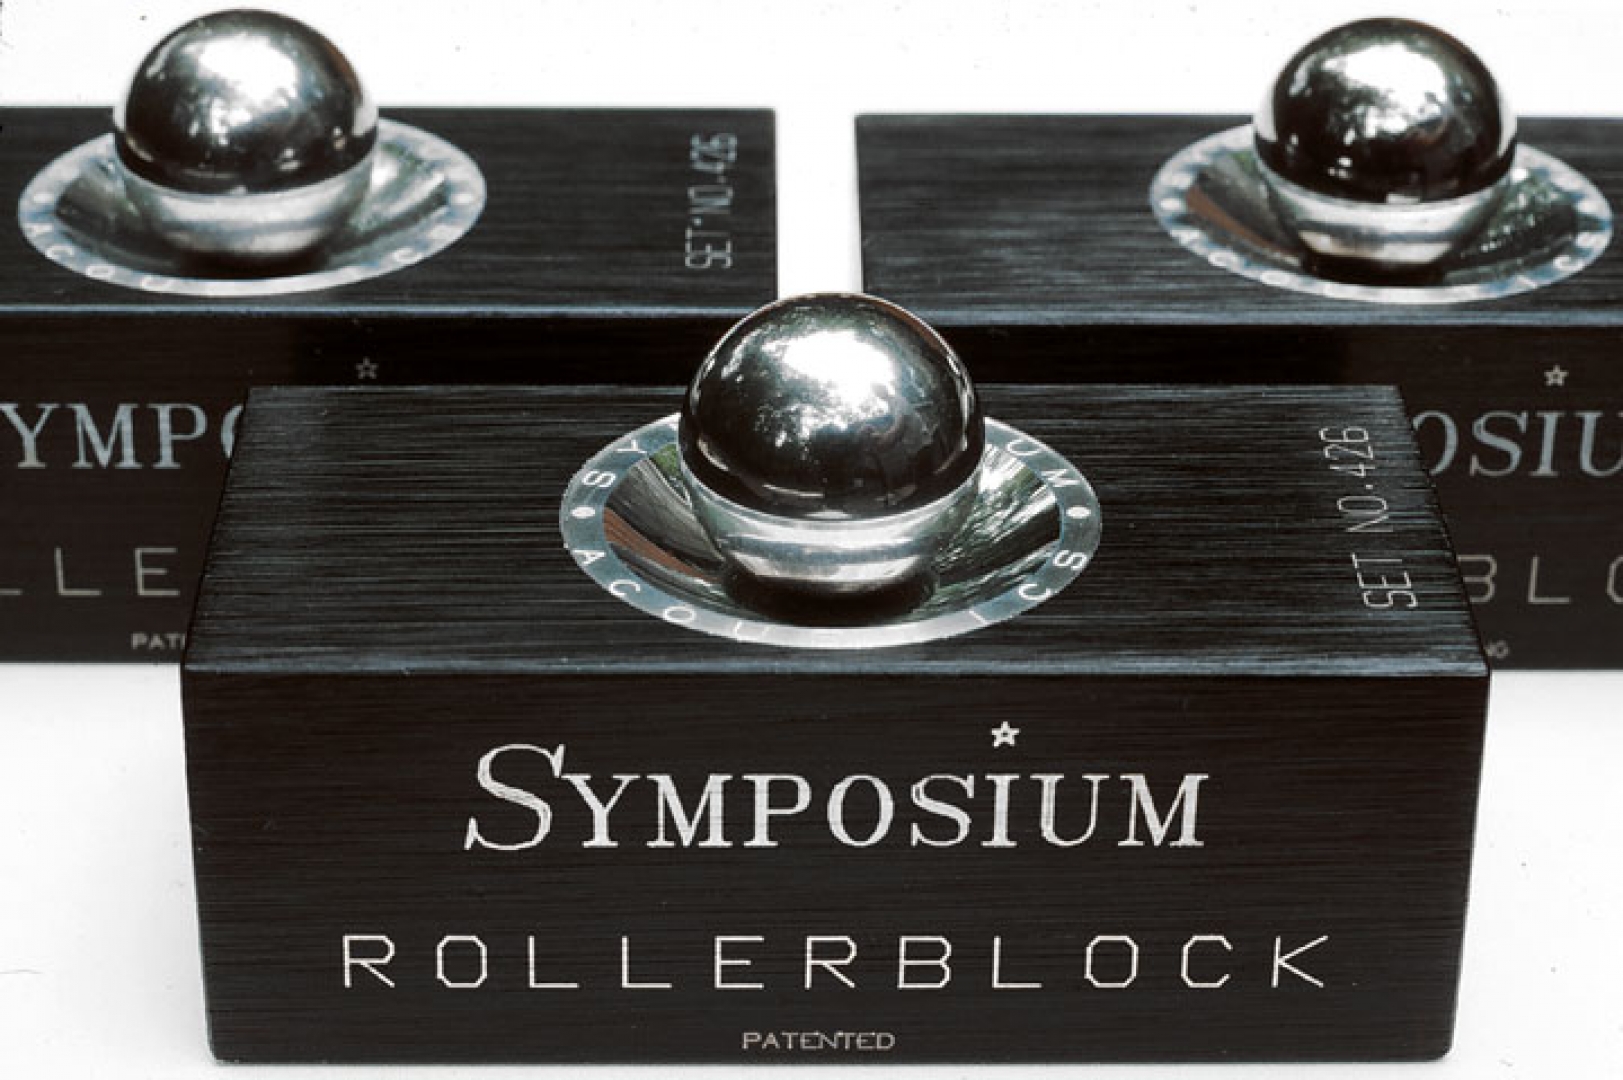 Chân kê chống rung Symposium Rollerblock Series 2+